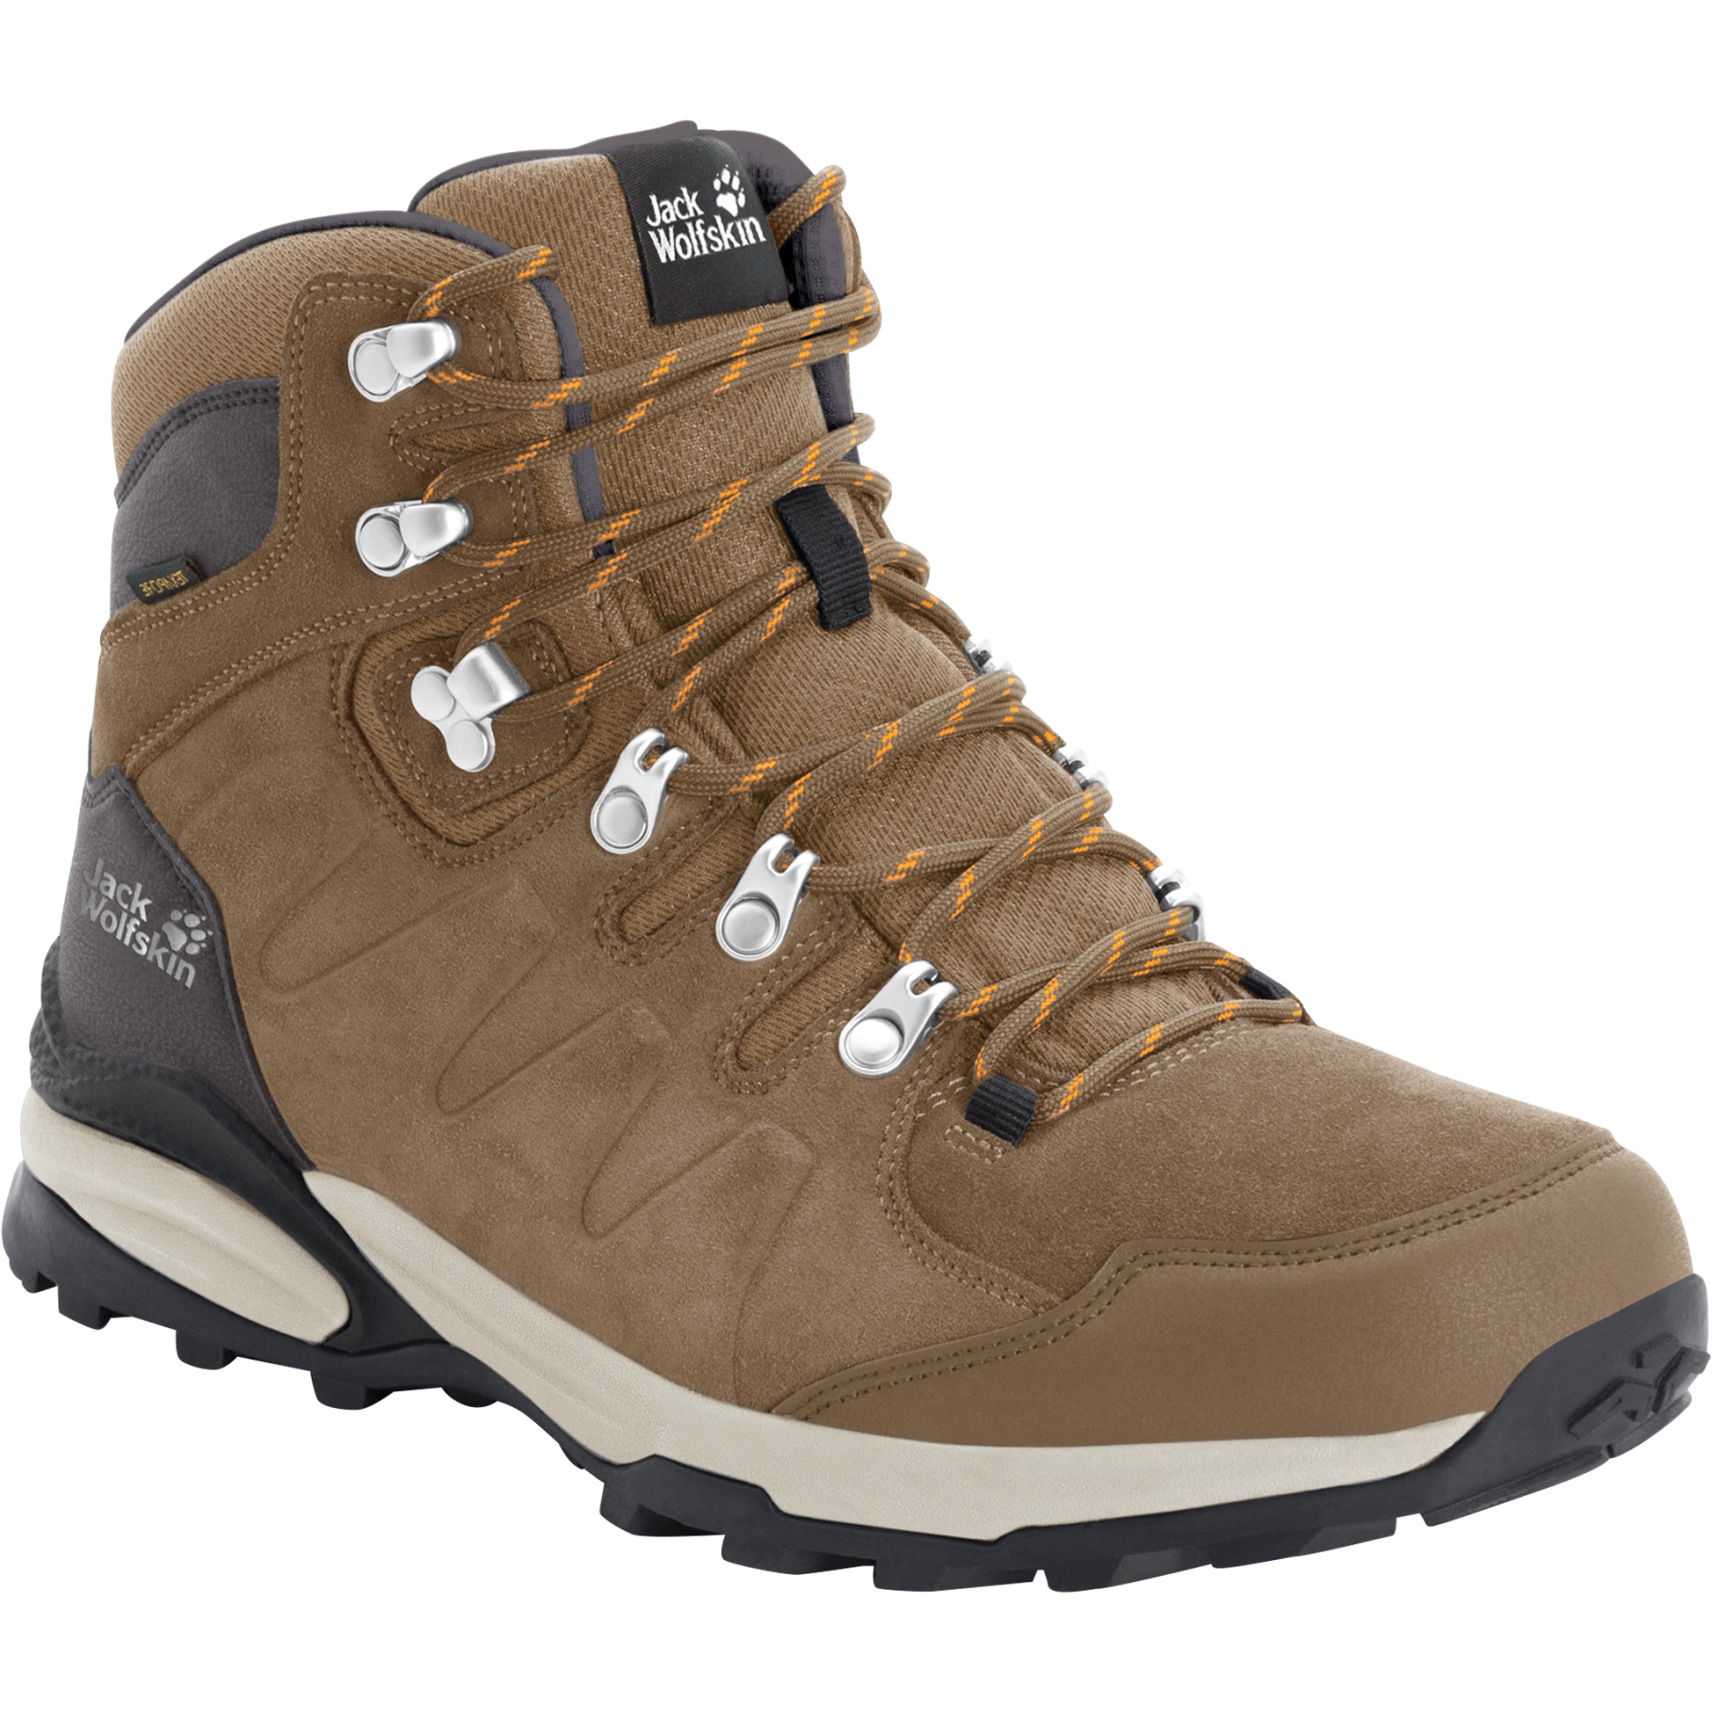 plank Gouverneur Aan het leren Jack Wolfskin Refugio Texapore Mid Hiking Boots Women - brown / apricot